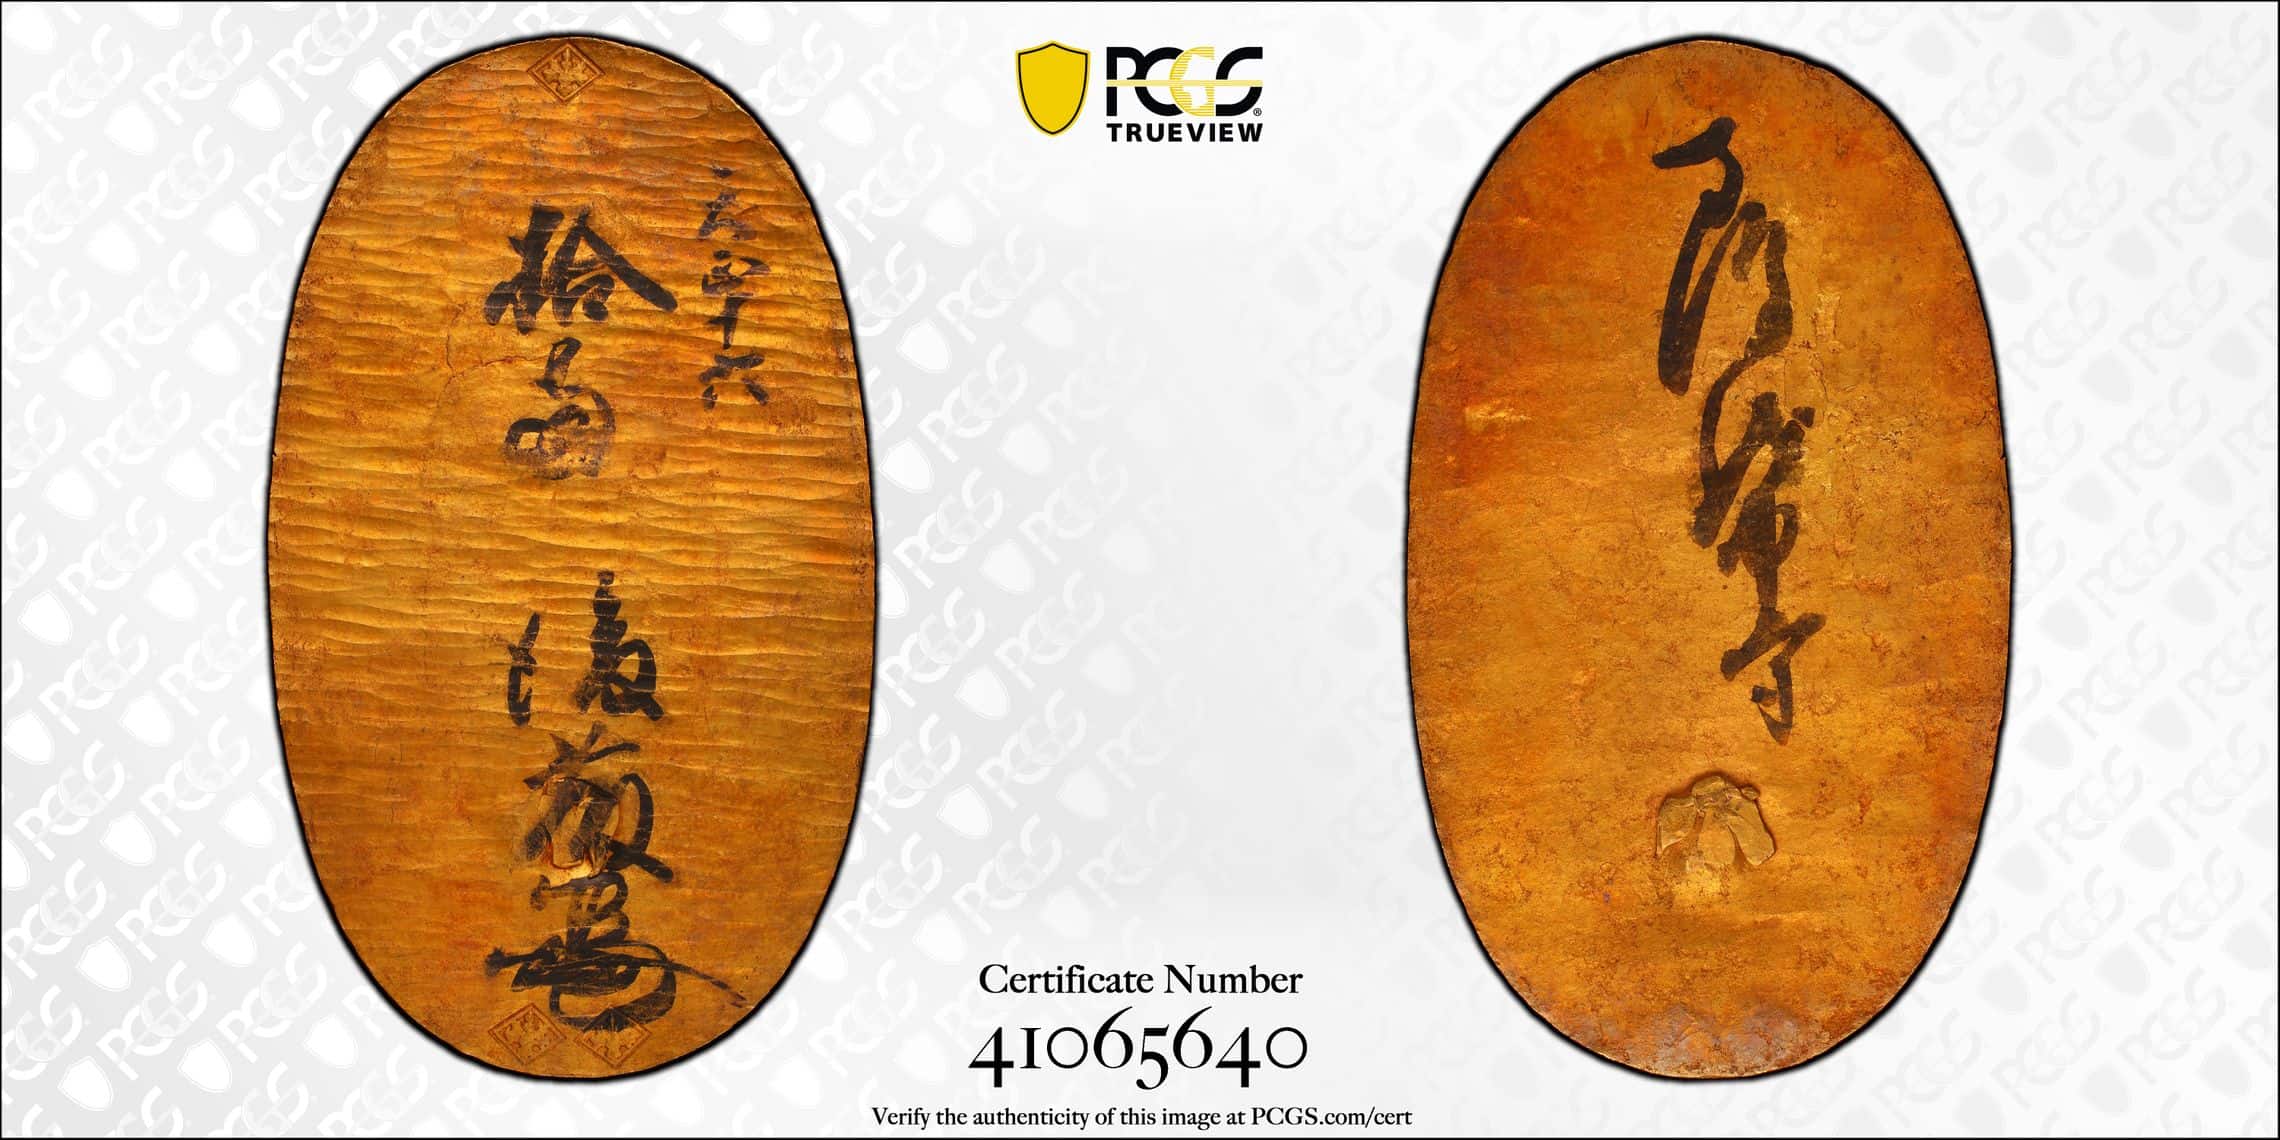 Hishi Oban (10 Ryo), ND Tensho Era (ca. 1588), PCGS MS60 Gold Shield